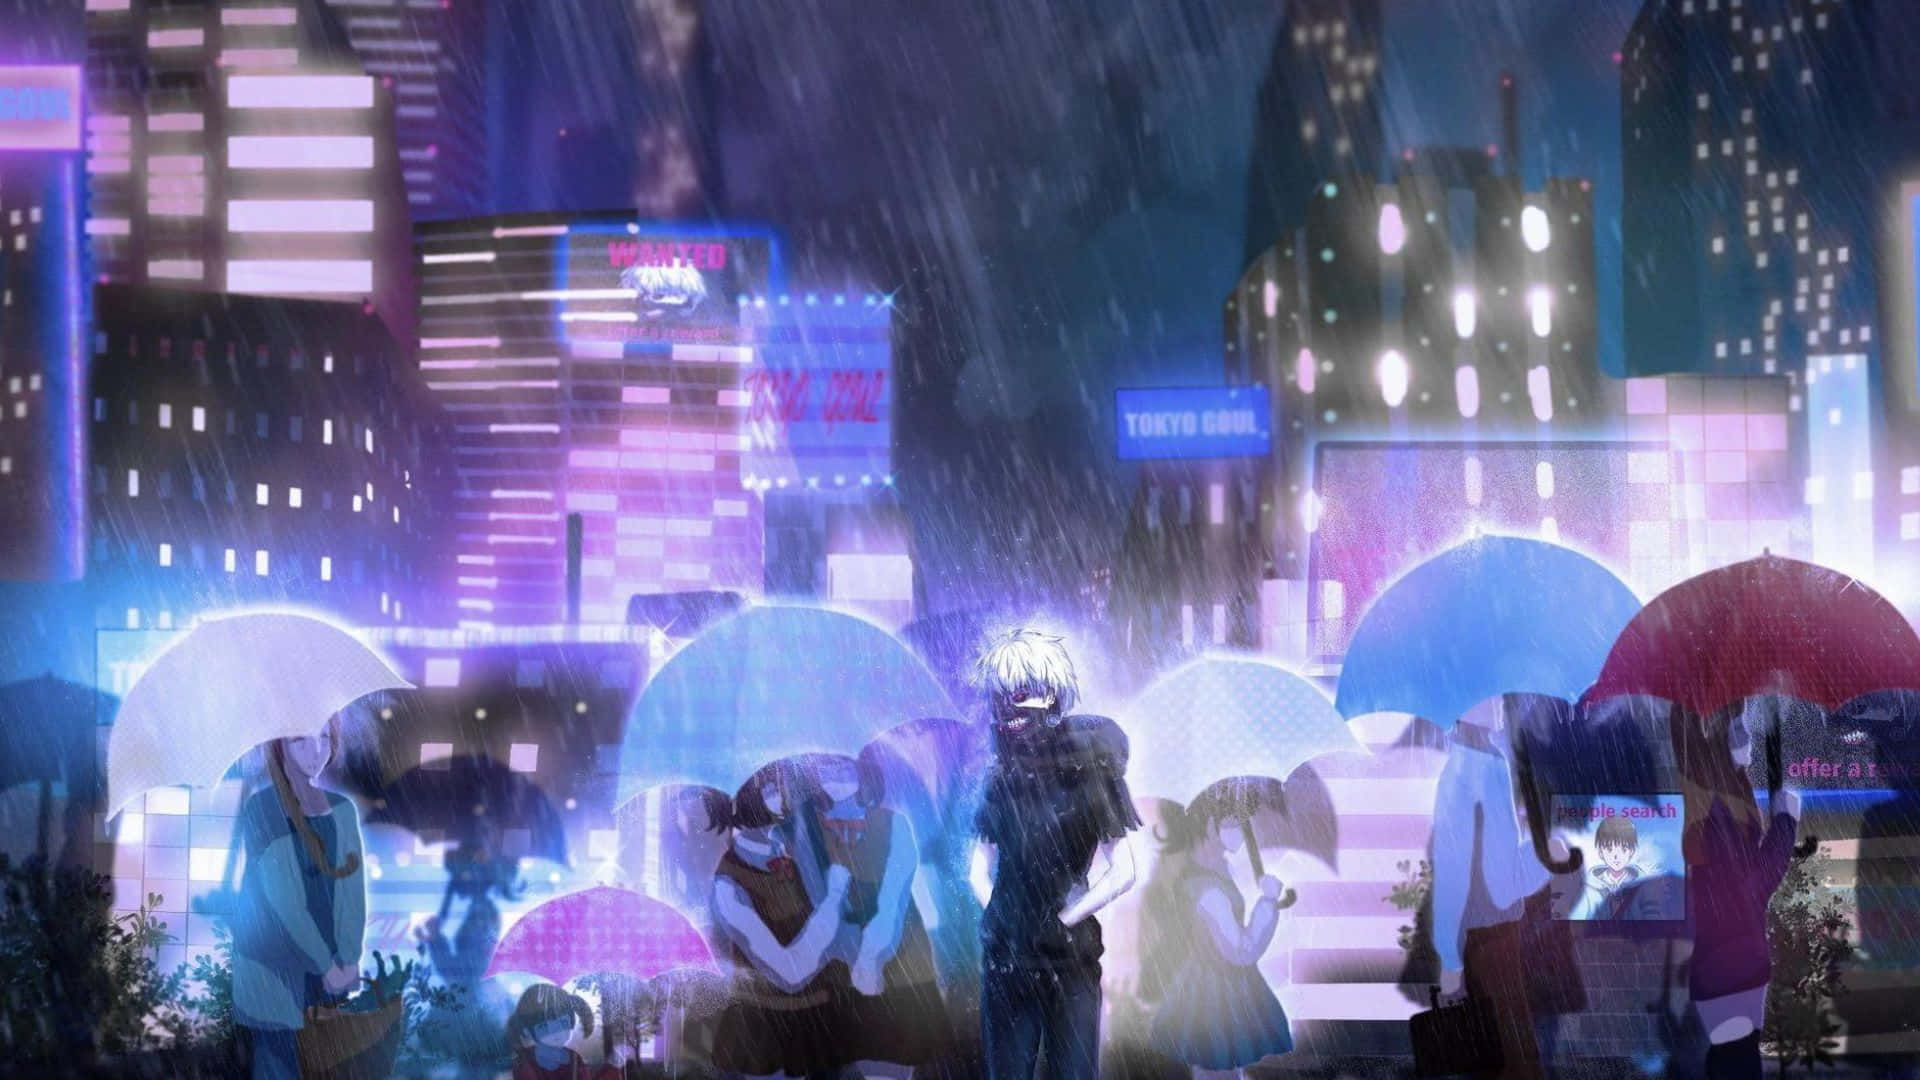 Umbrella anime rain 1080P 2K 4K 5K HD wallpapers free download   Wallpaper Flare